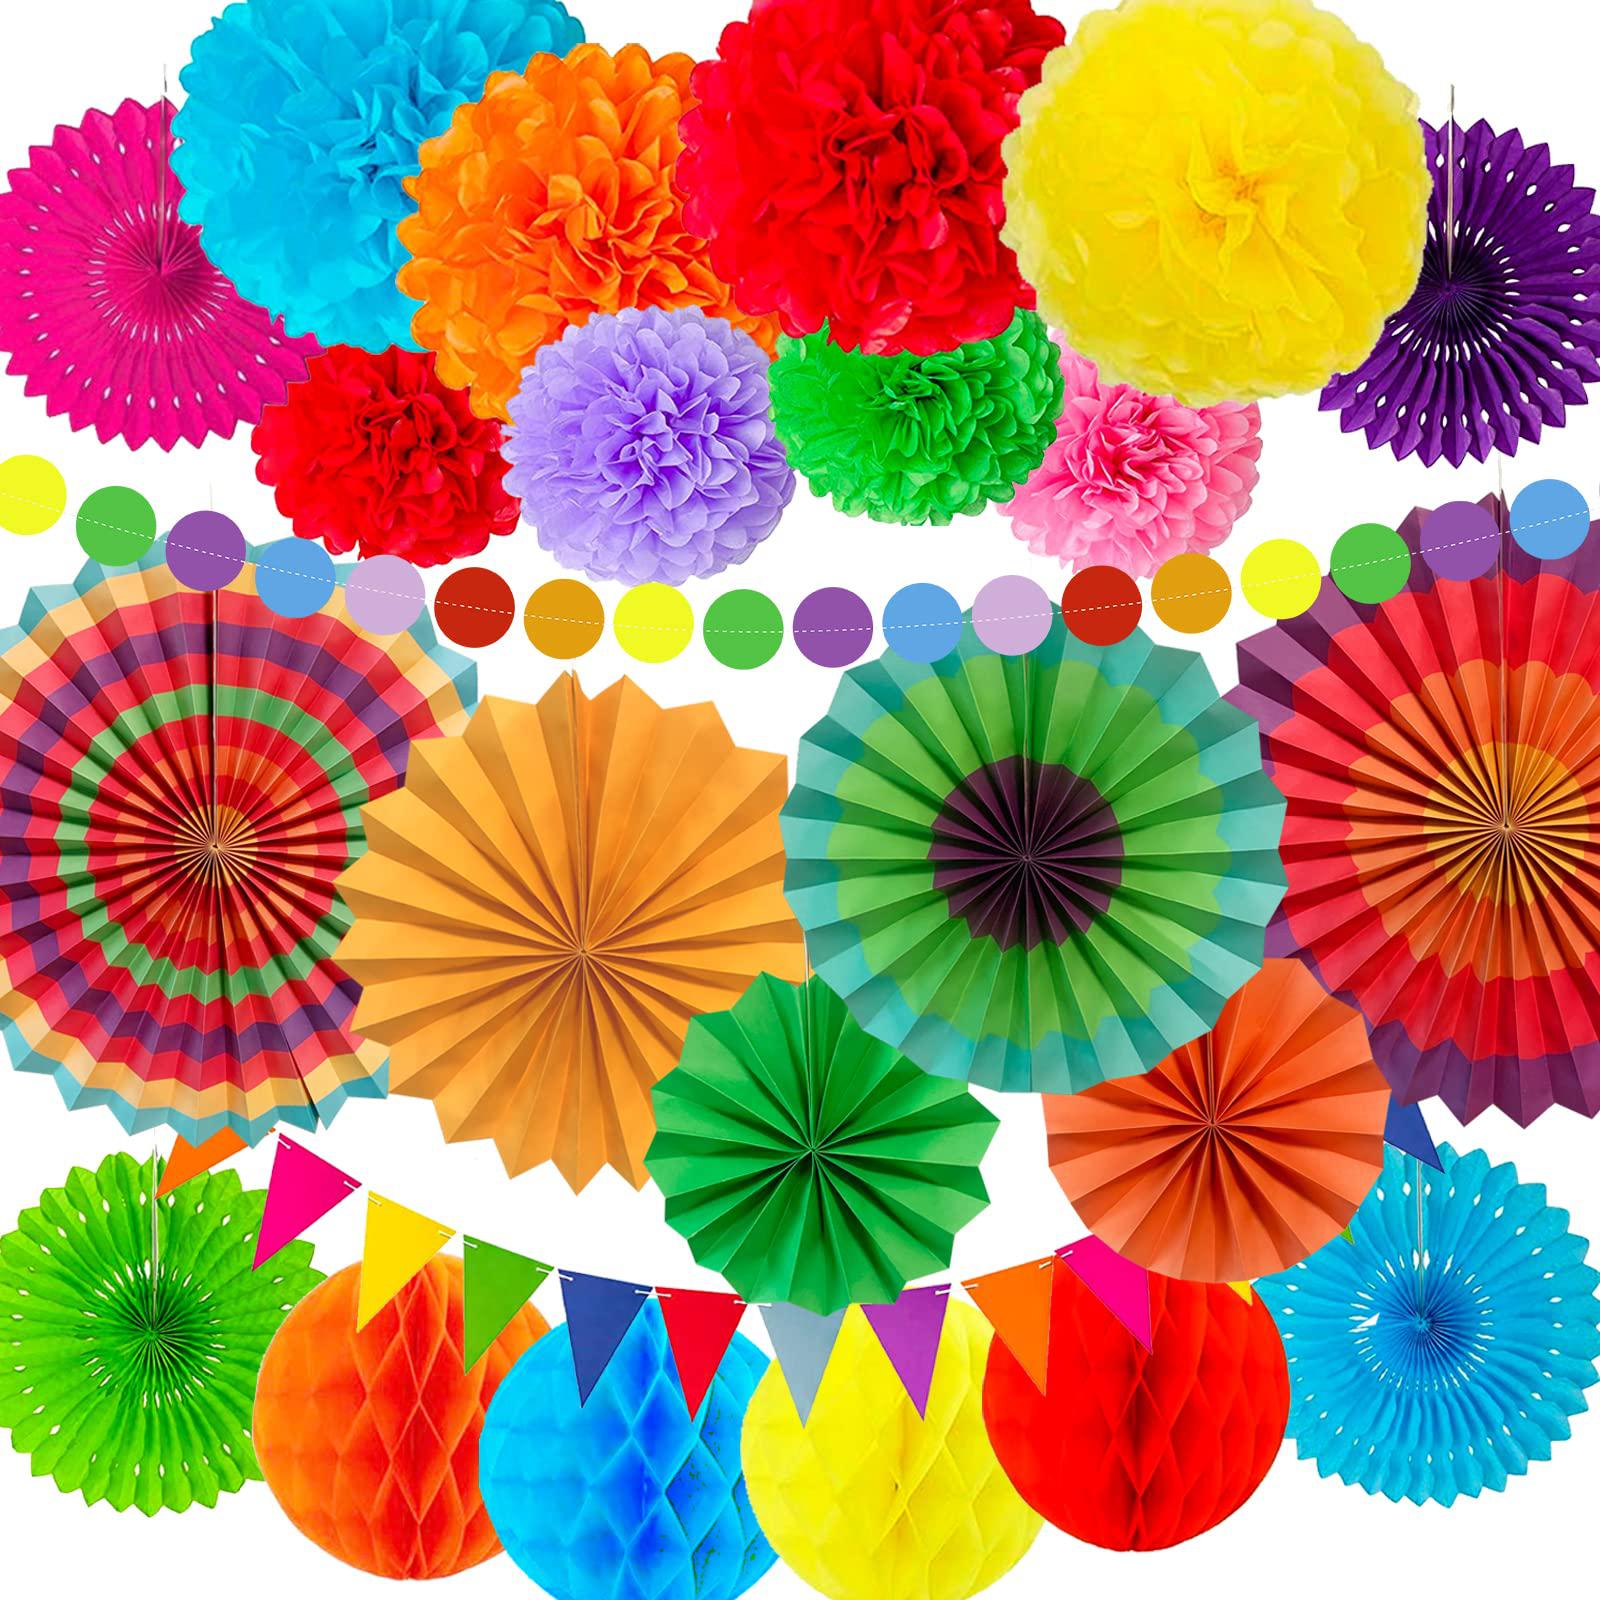 Fiesta Paper Fan Party Decorations Set, 24pcs Colorful Paper Fans, Hollow Paper Fans, Tissue Paper Pom Poms, Honeycomb Balls, Dot Garland for Fiesta